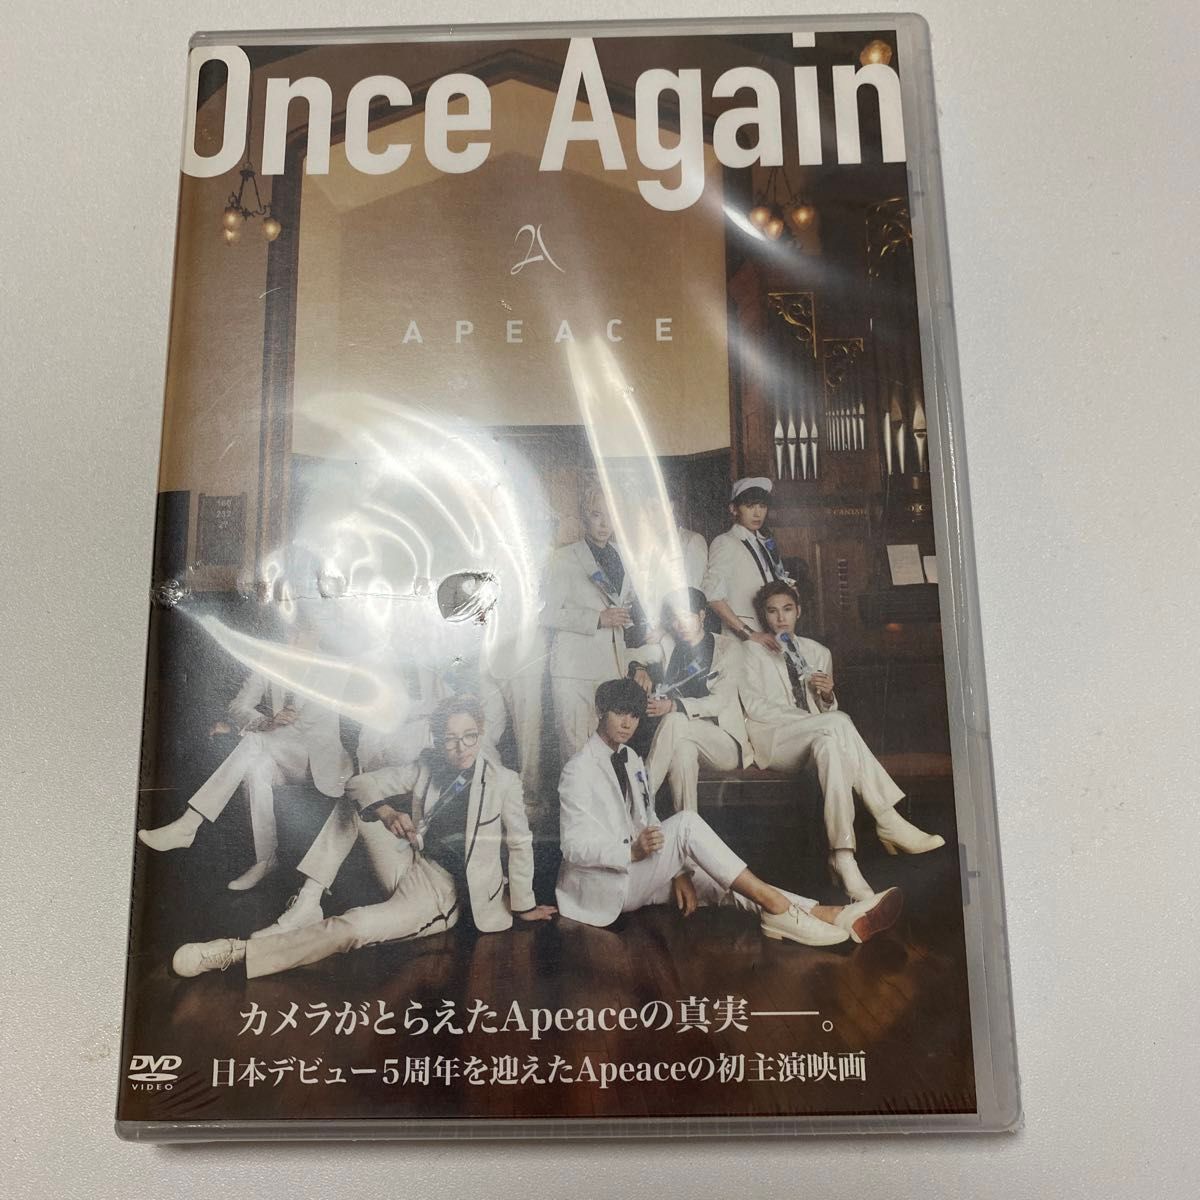 Once Again DVD